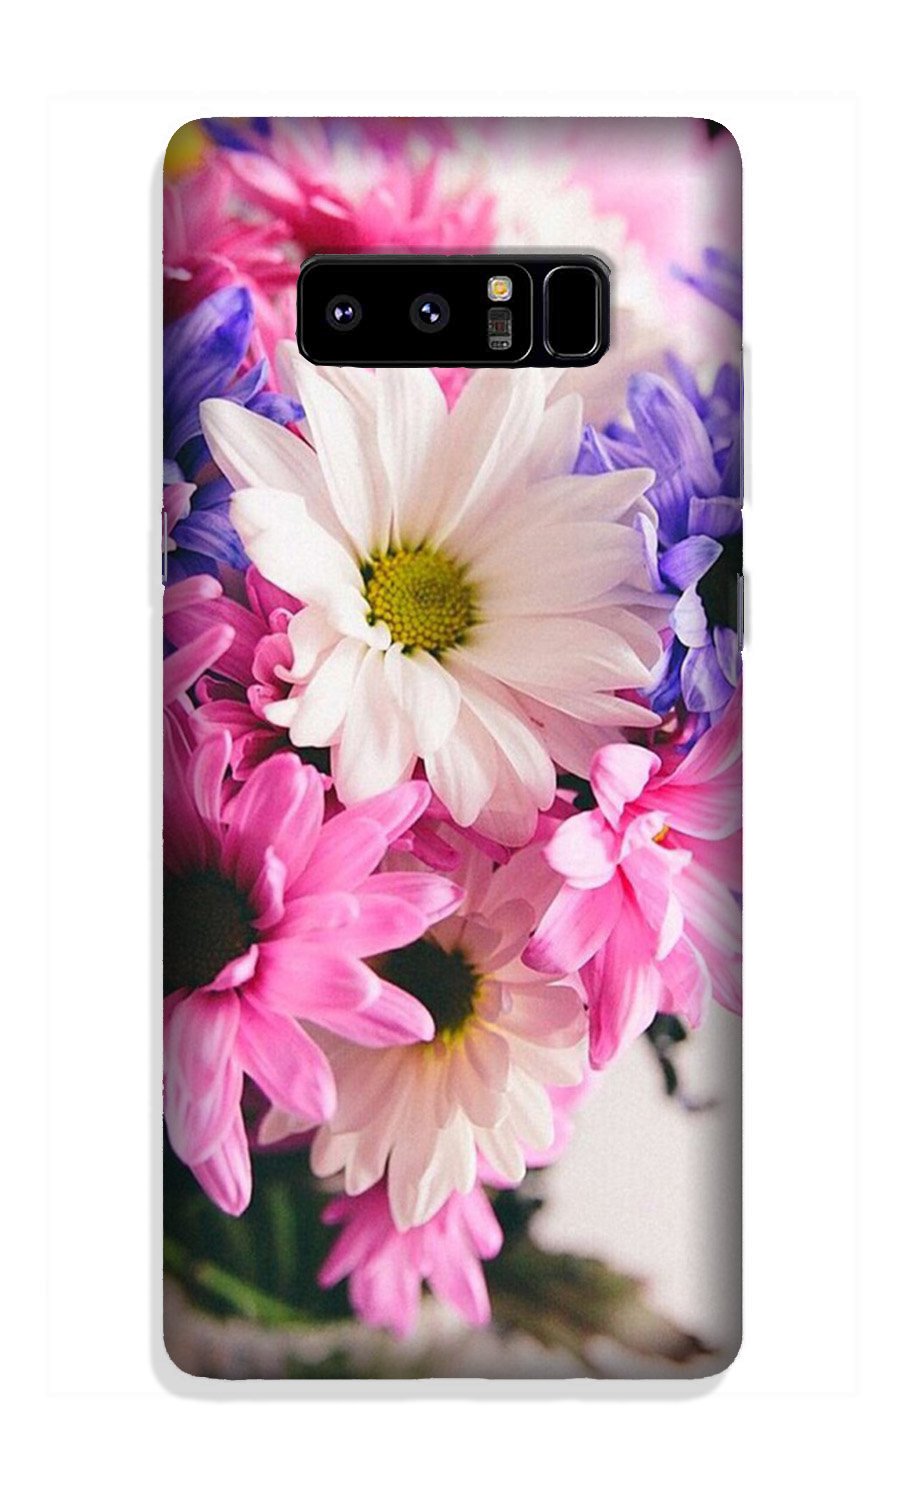 Coloful Daisy Case for Galaxy Note 8